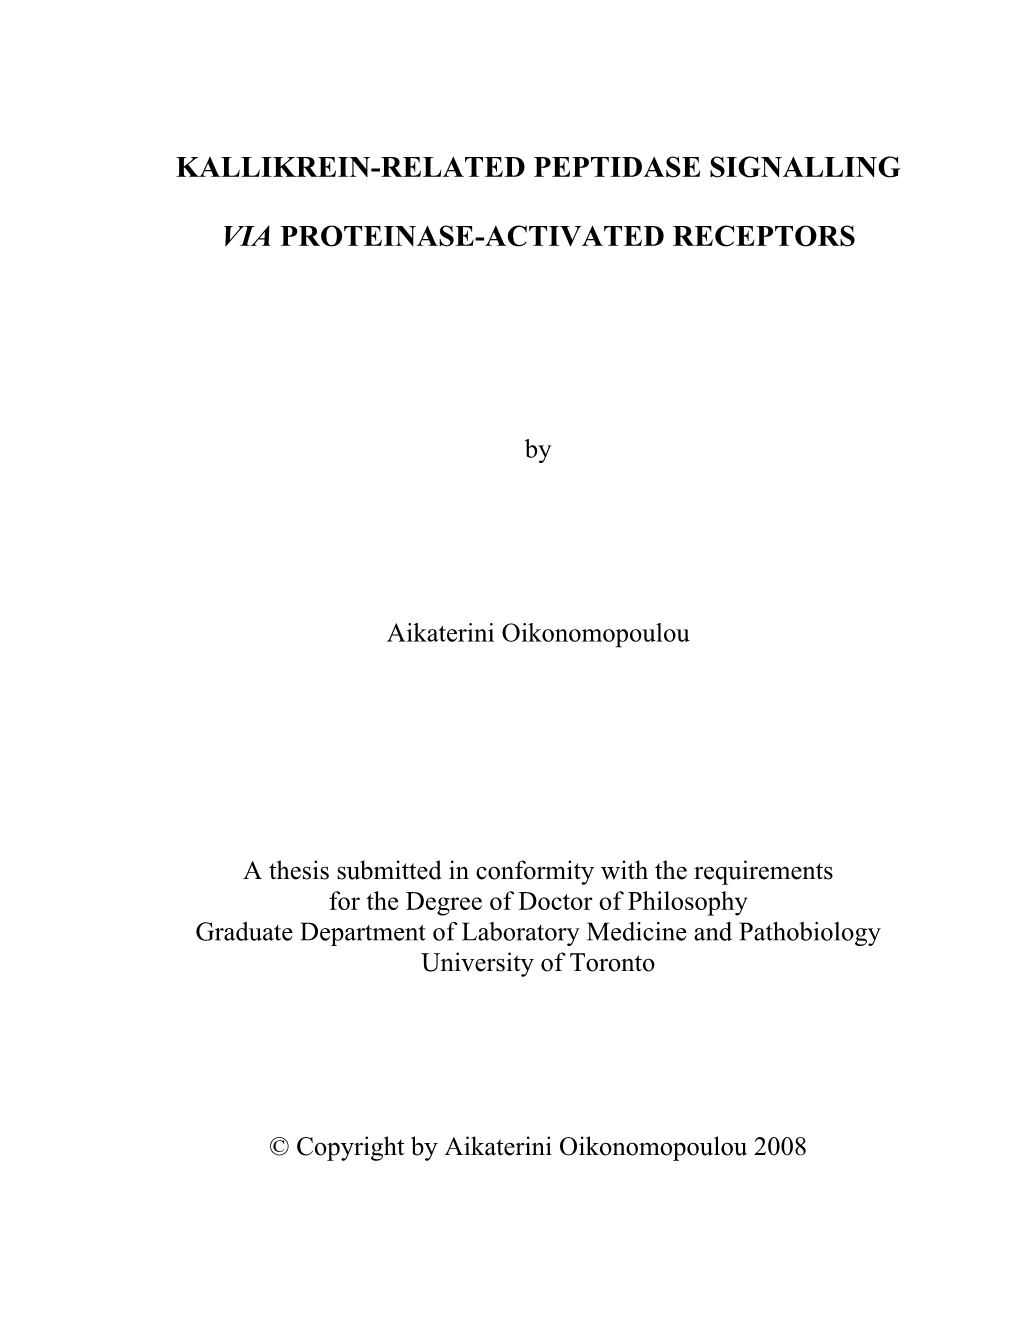 Kallikrein-Related Peptidase Signalling Via Proteinase-Activated Receptors